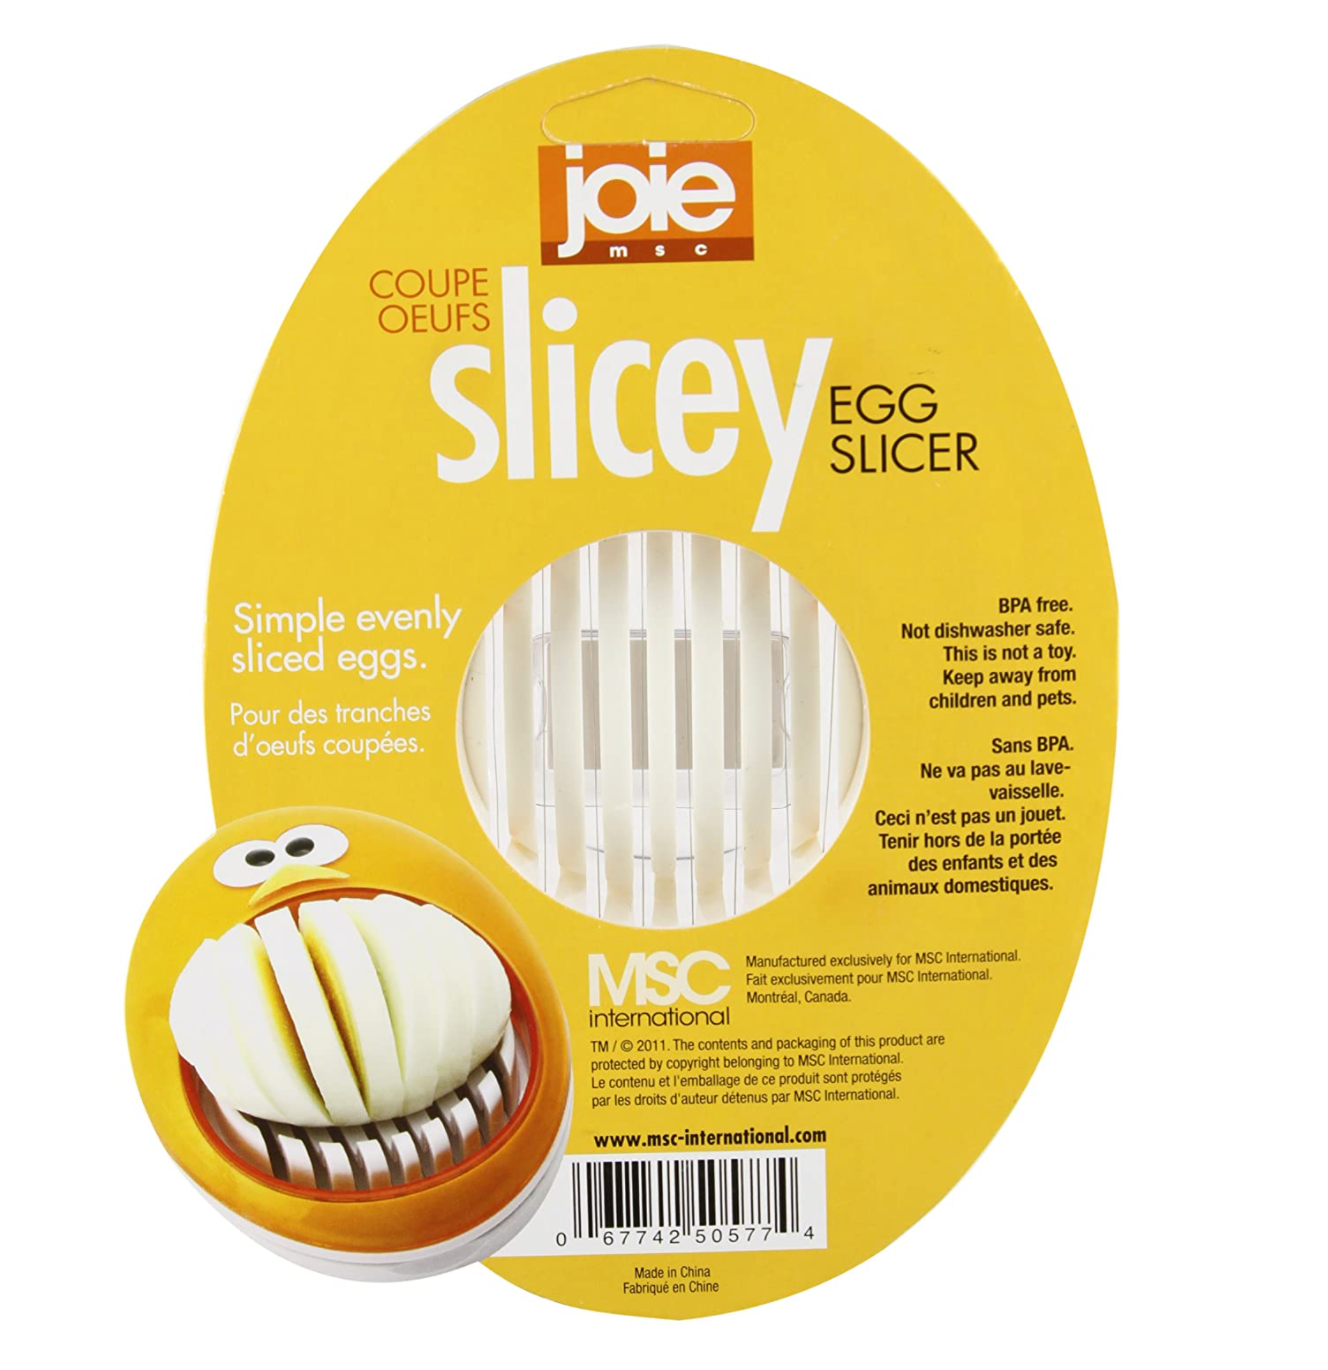 Joie Slicey Egg Slicer